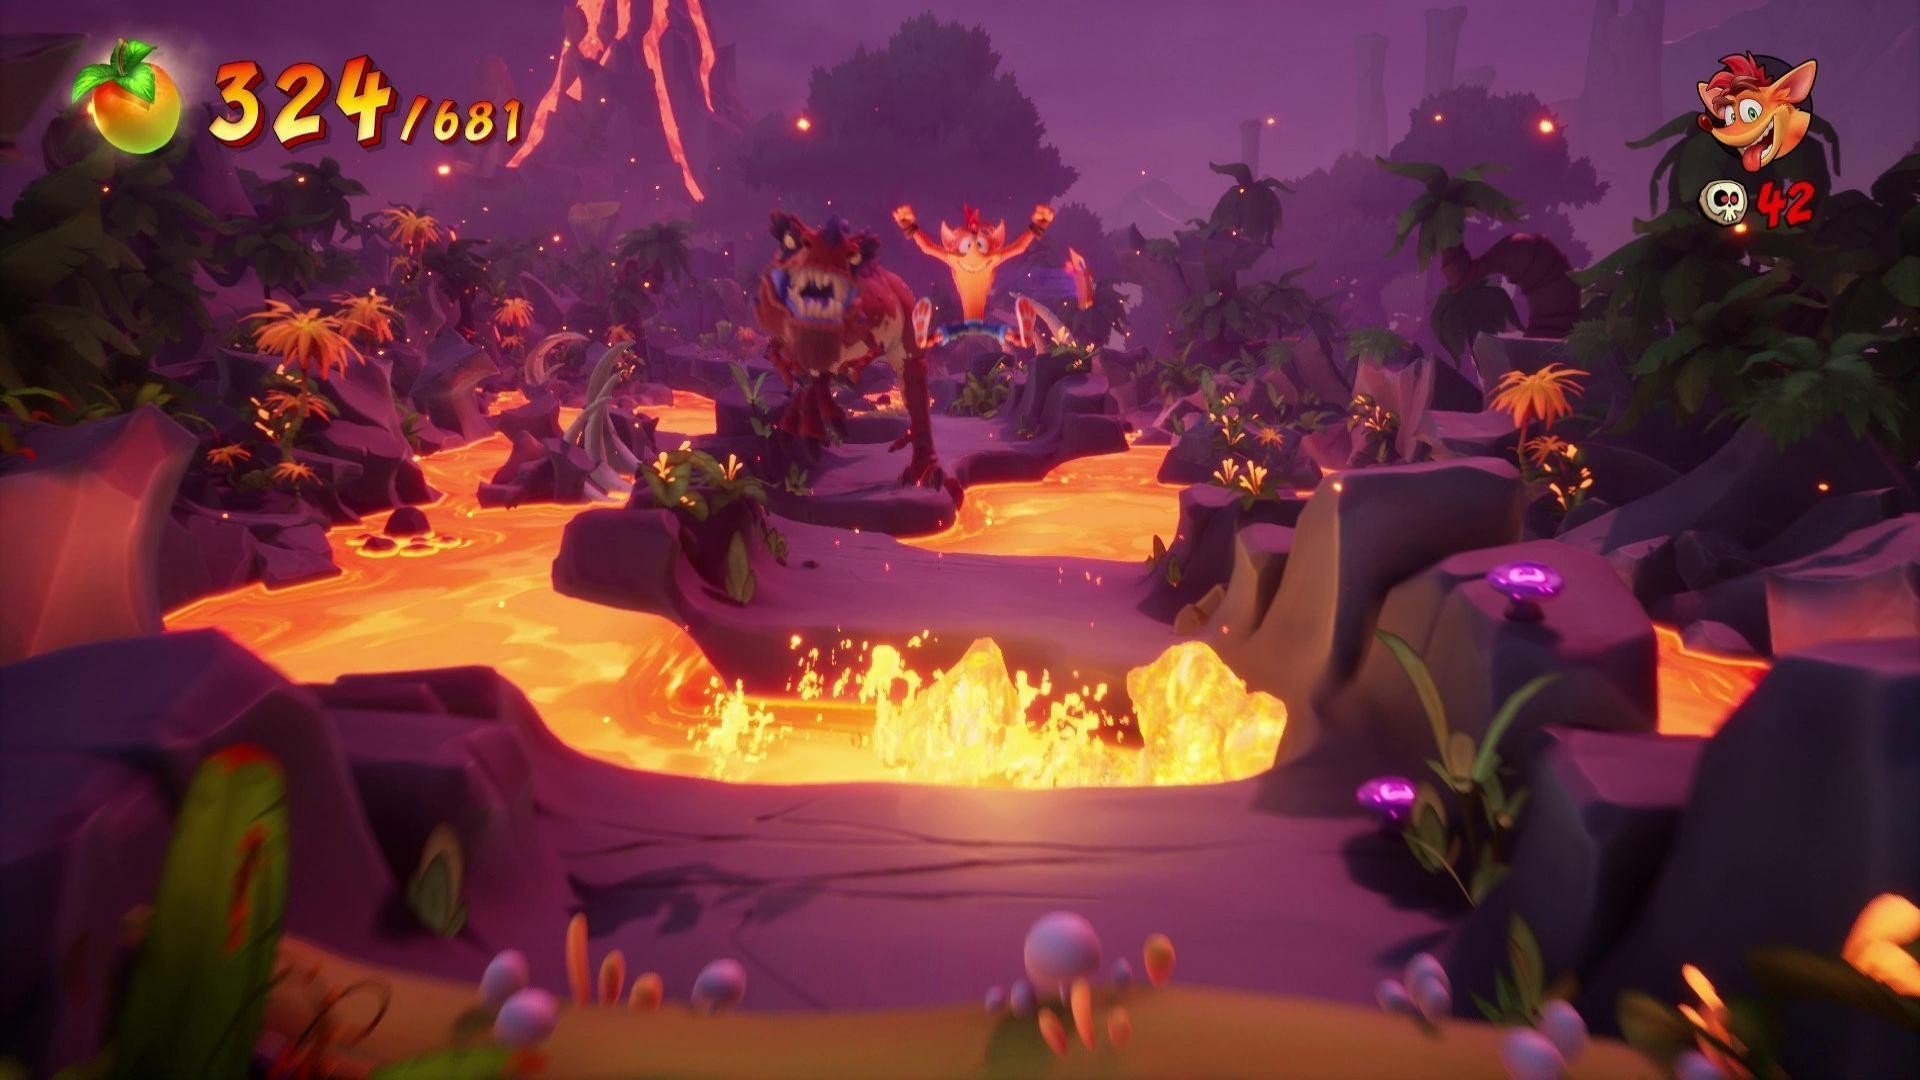 Скриншот 2 к игре Crash Bandicoot 4: It’s About Time v 1.0.03202023 [Portable] (2021)